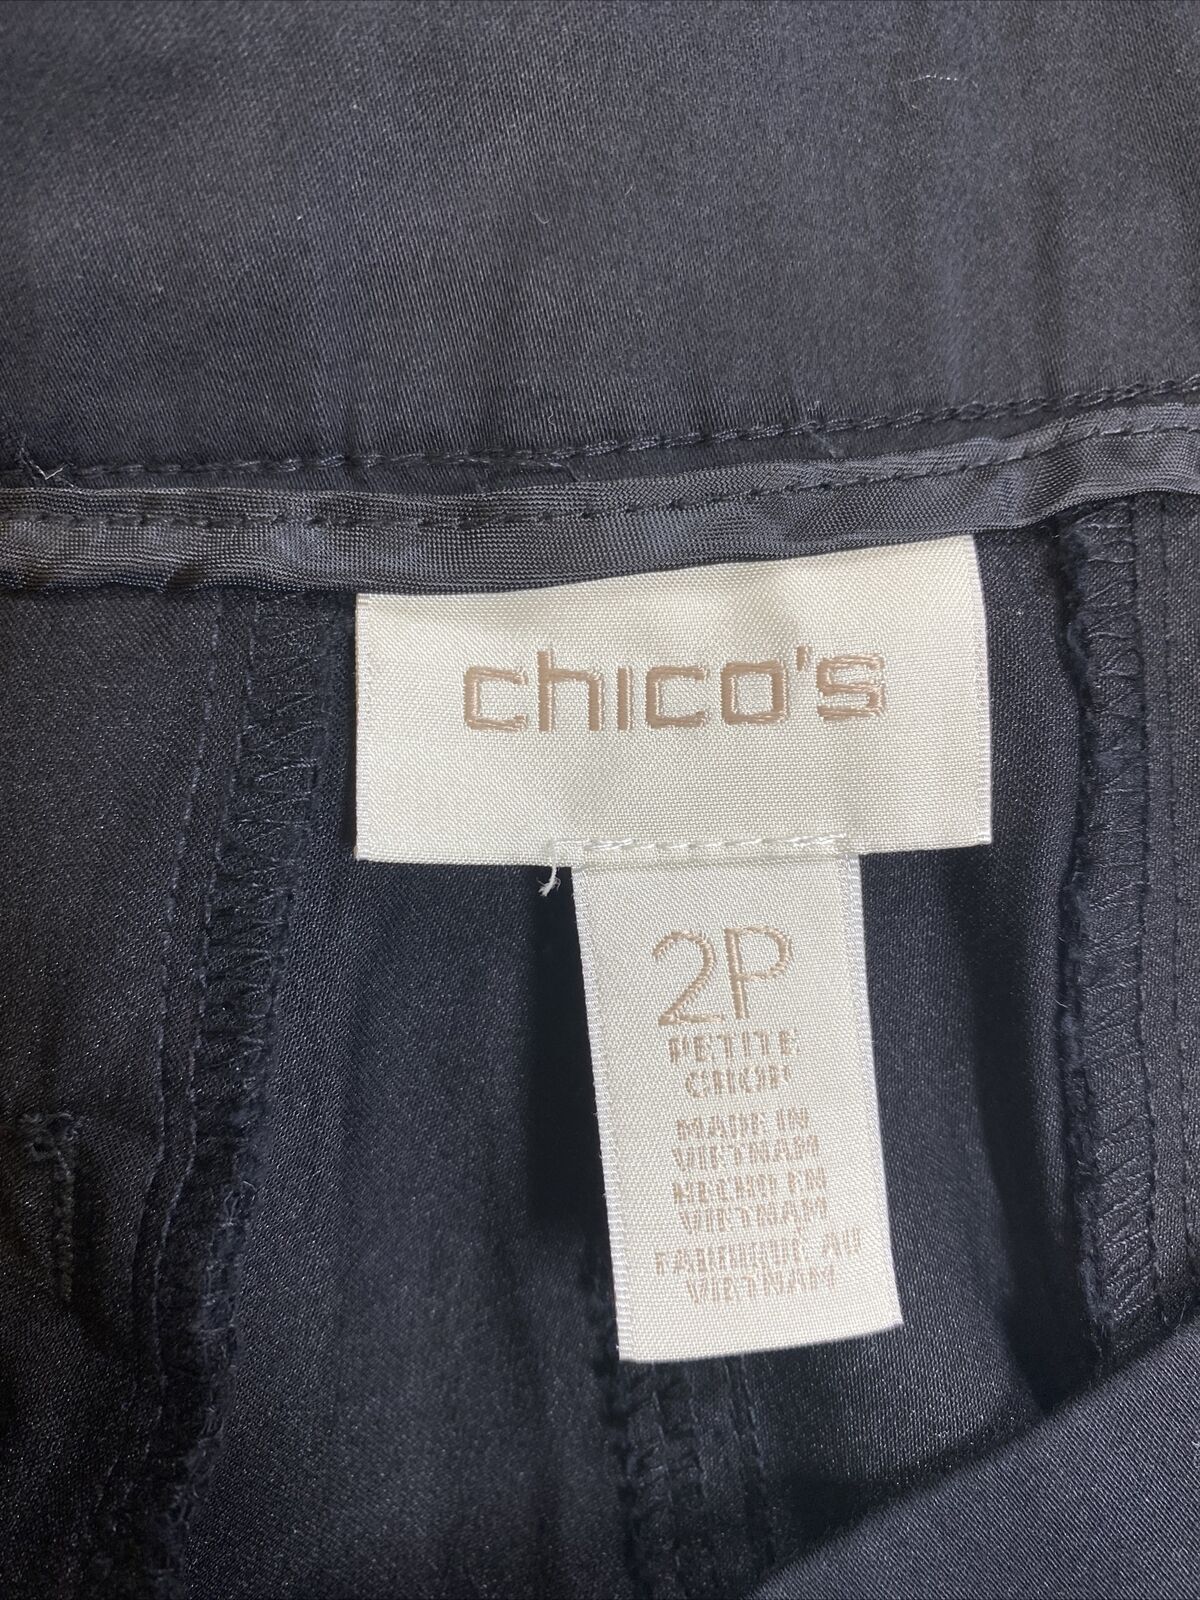 Chico's Women's Black Stretch Casual Cargo Crop Pants - Petite 2P